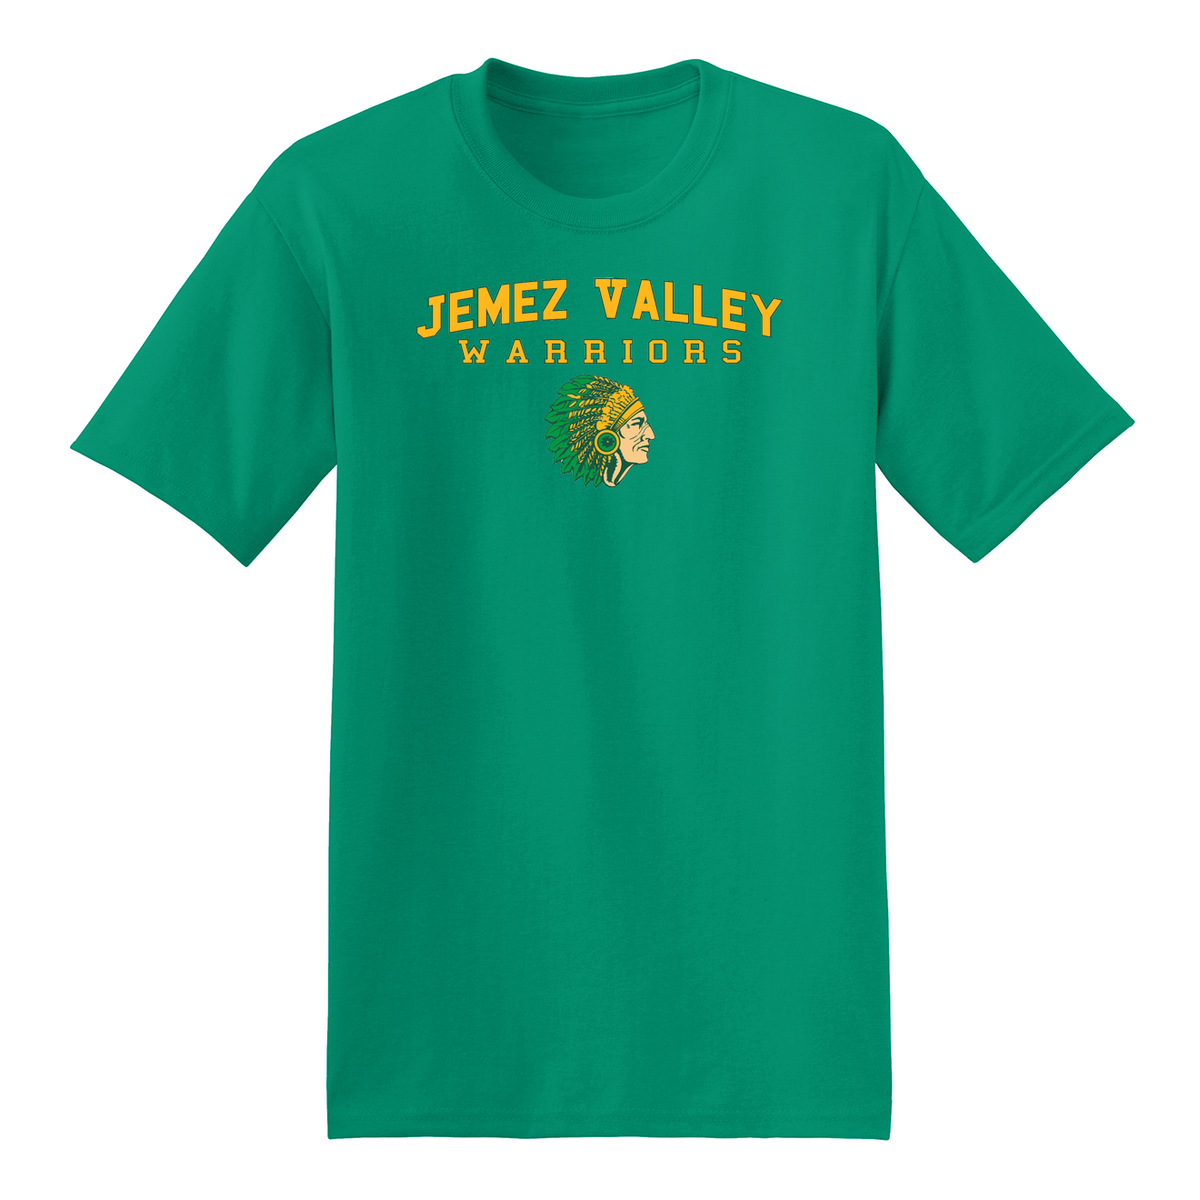 Jemez Valley Warriors T-Shirt